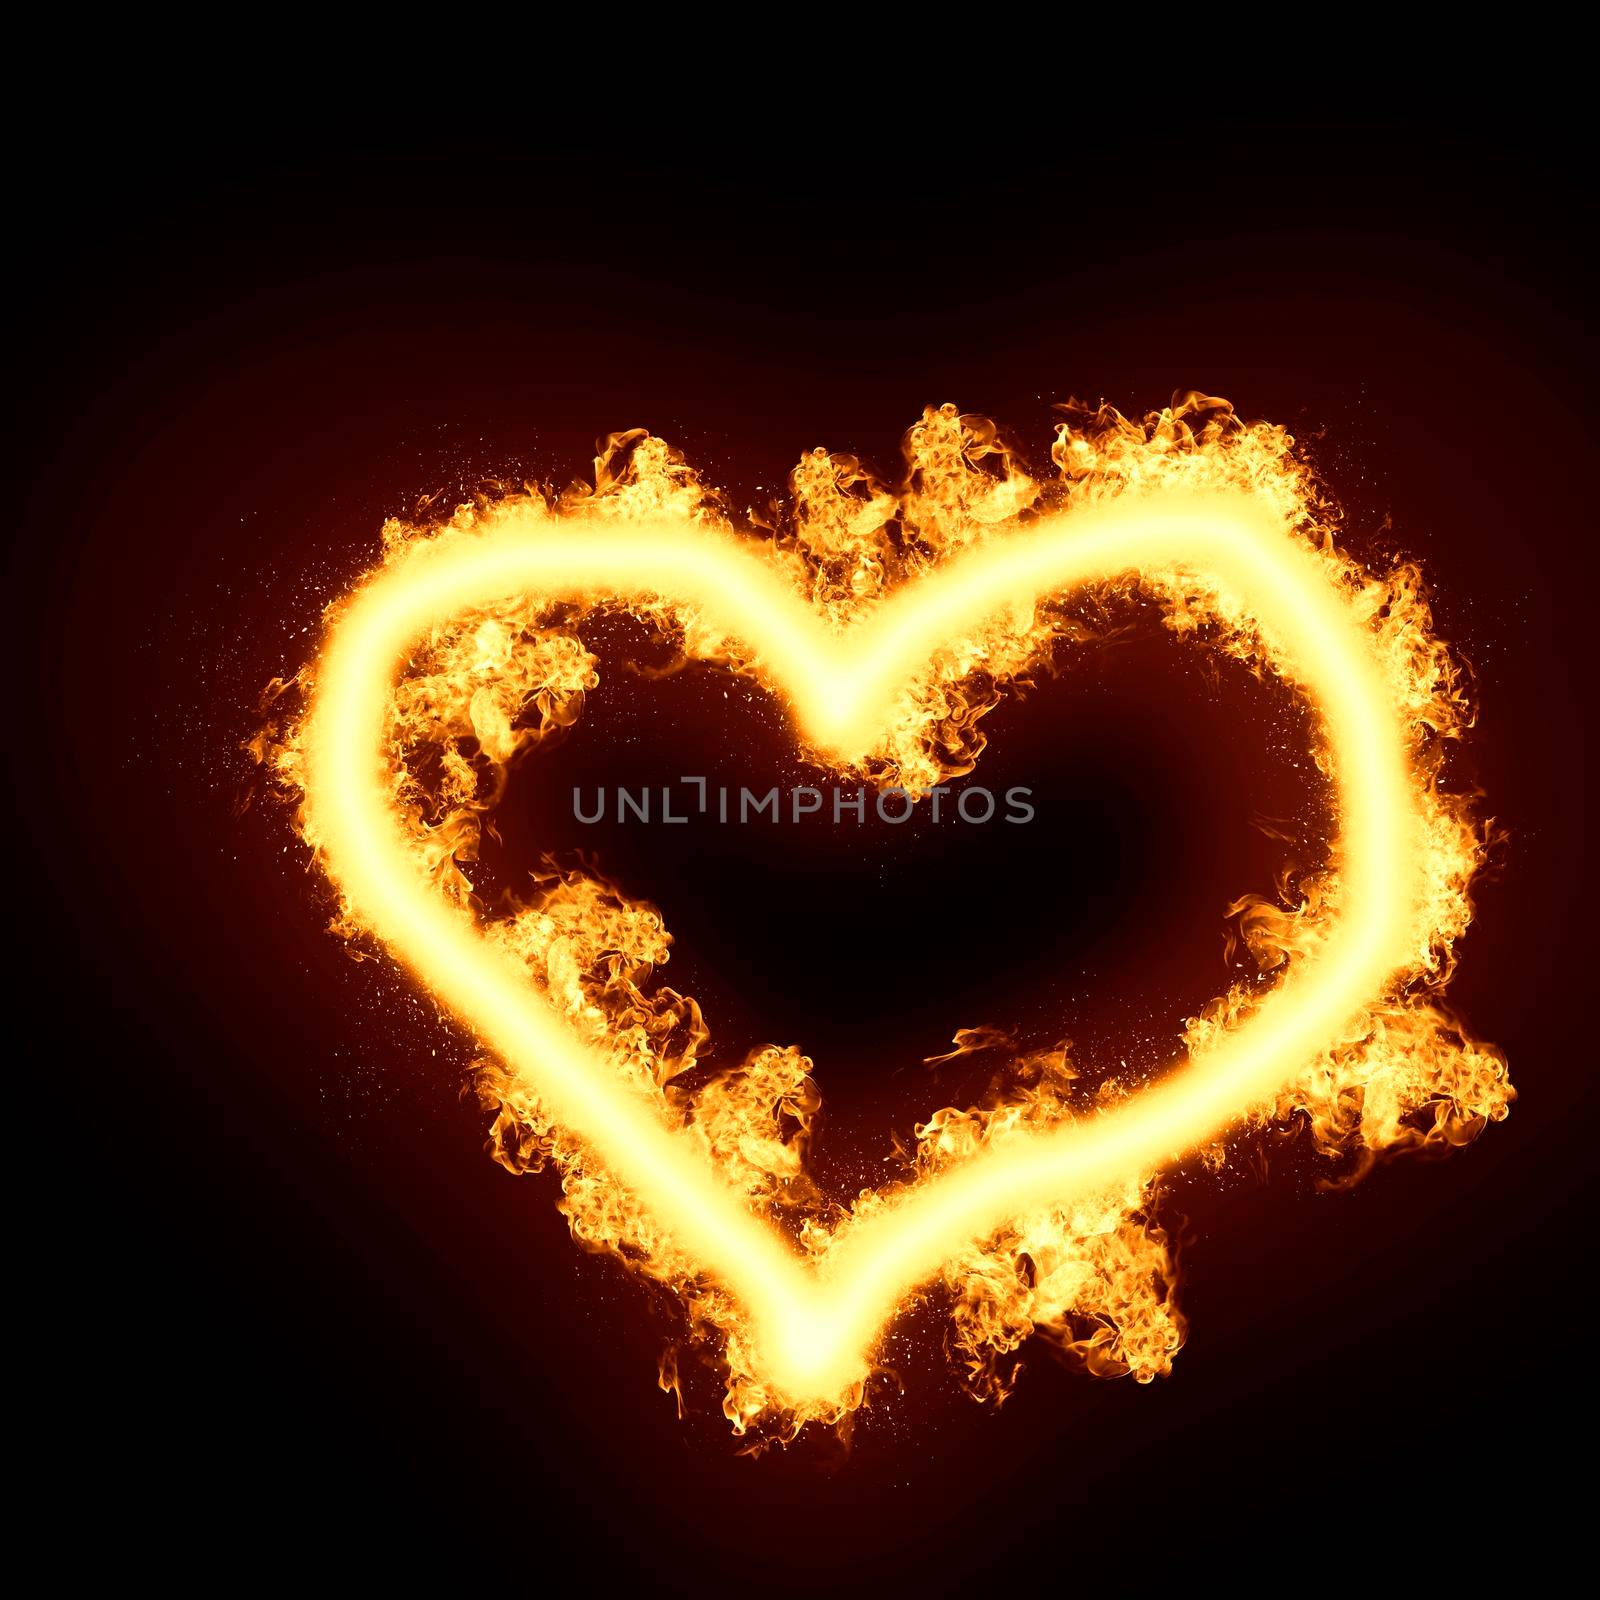 Illustration of burning heart isolated on a black background